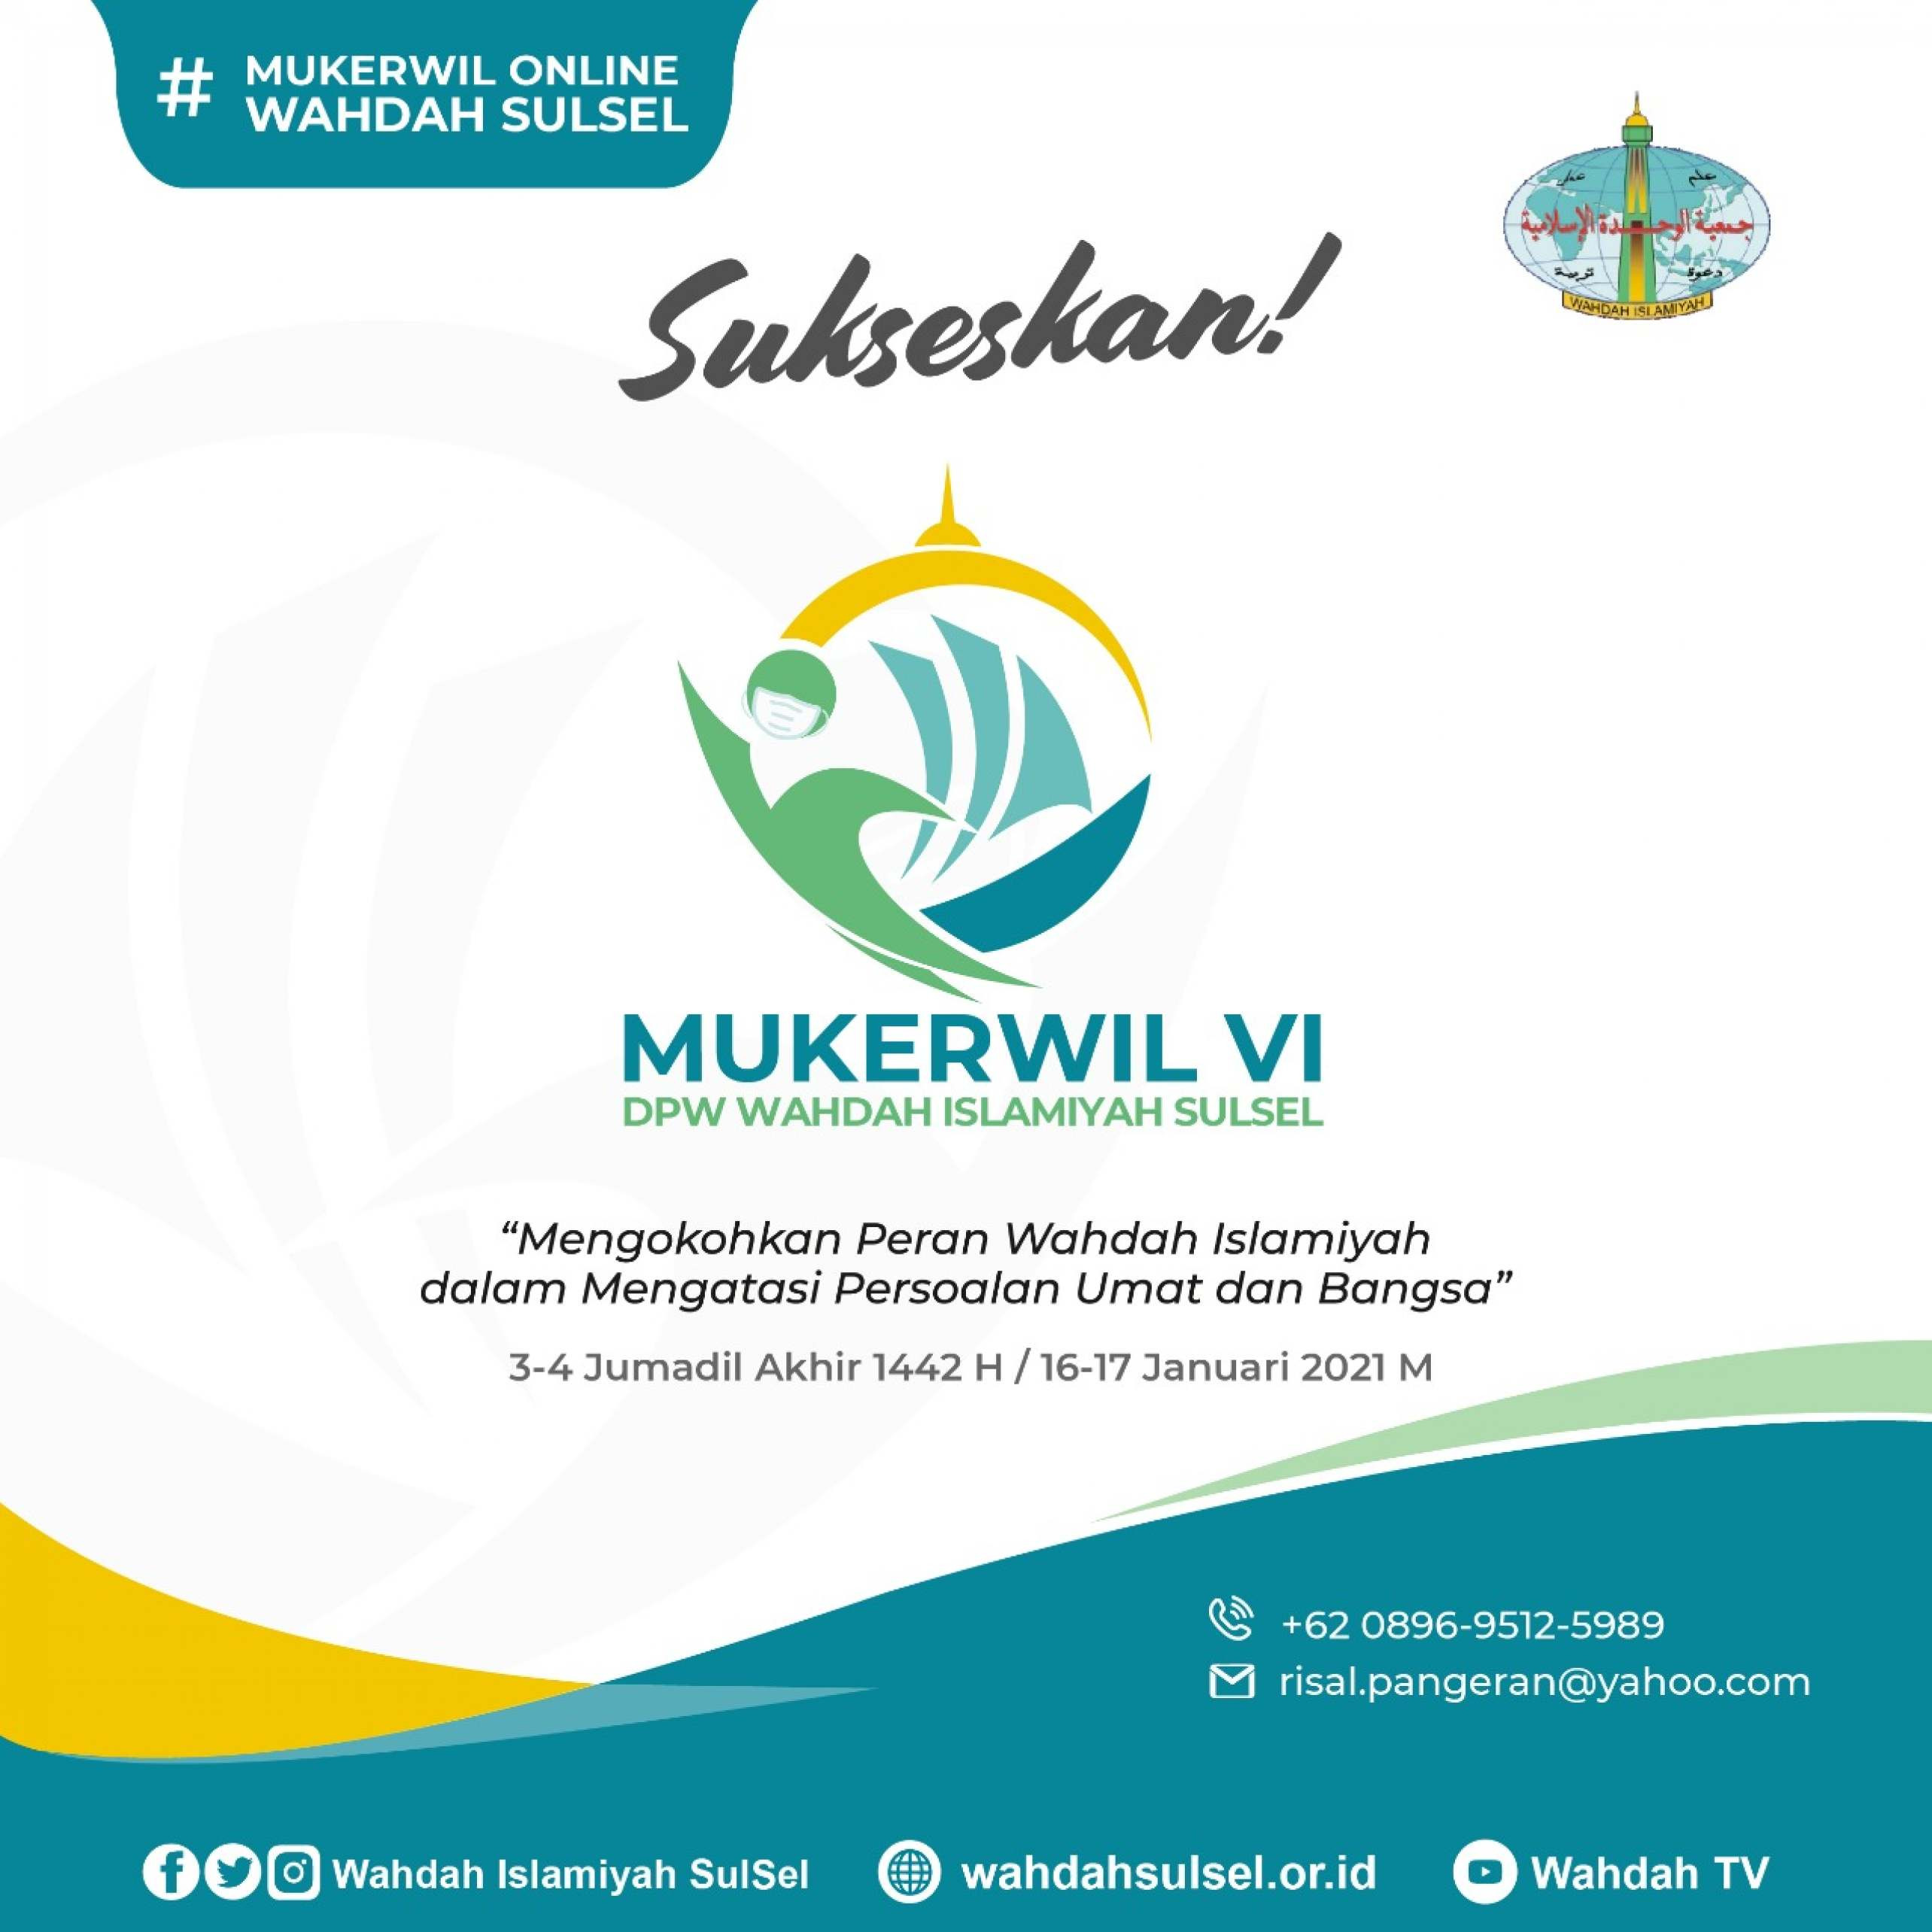 Mukerwil VI DPW Wahdah Islamiyah Sulsel